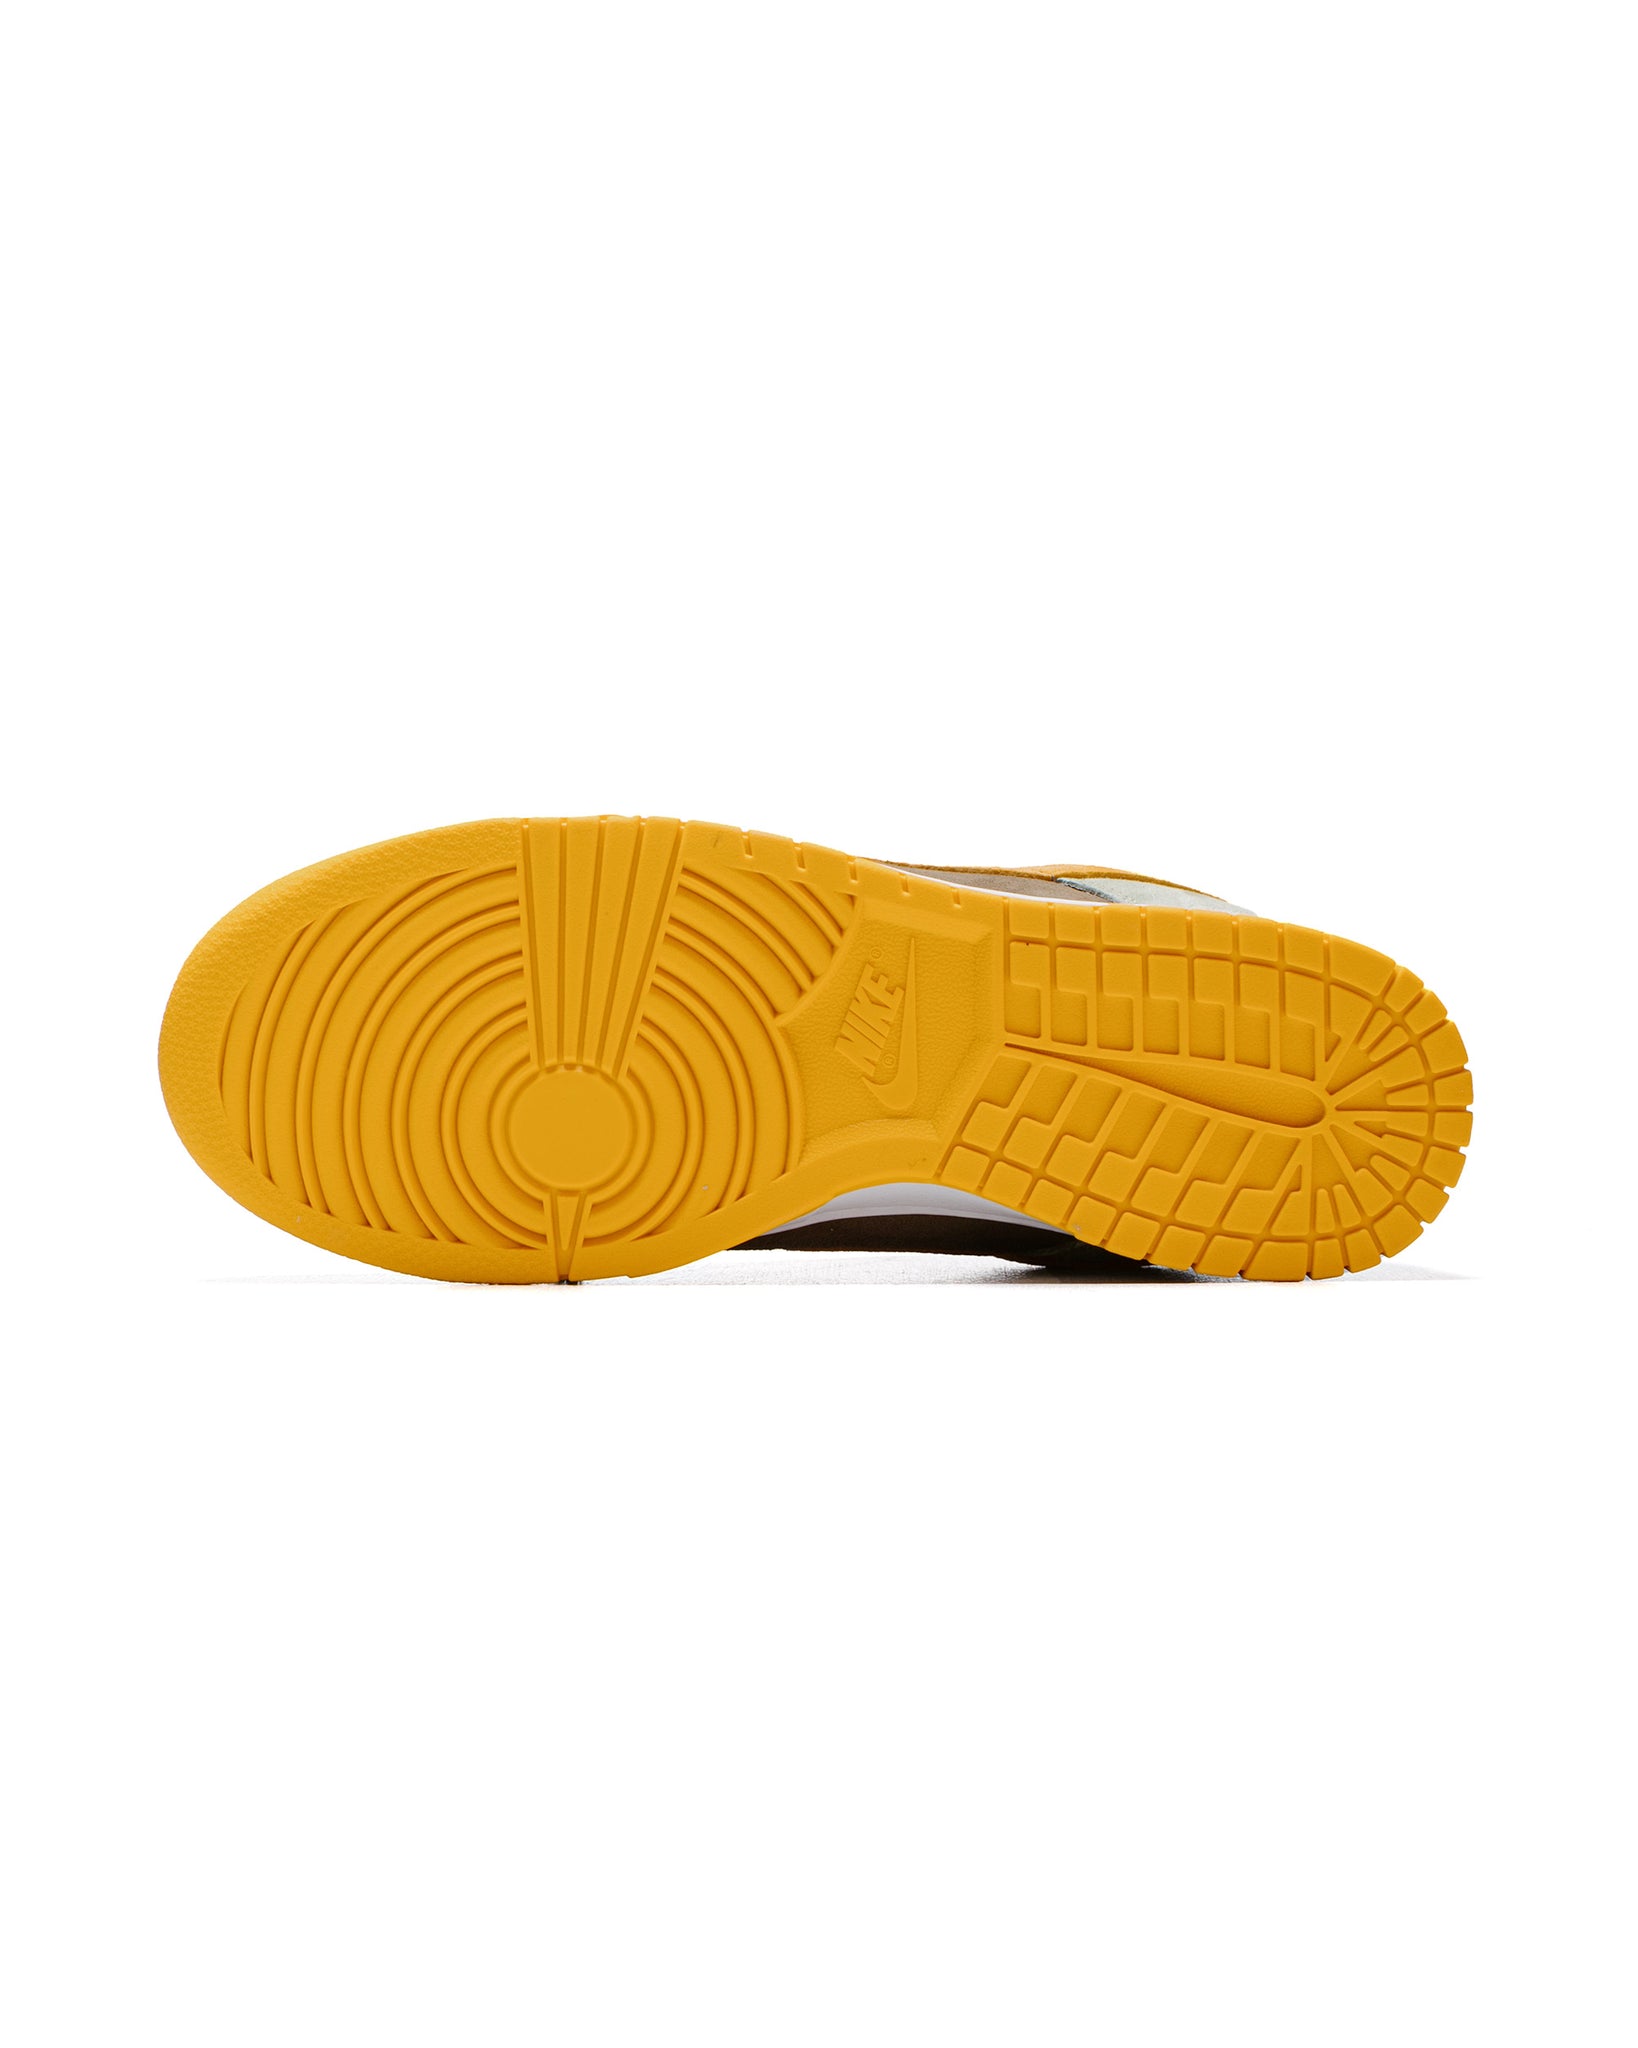 Nike Dunk Low SE Dusty Olive/Pro Gold sole